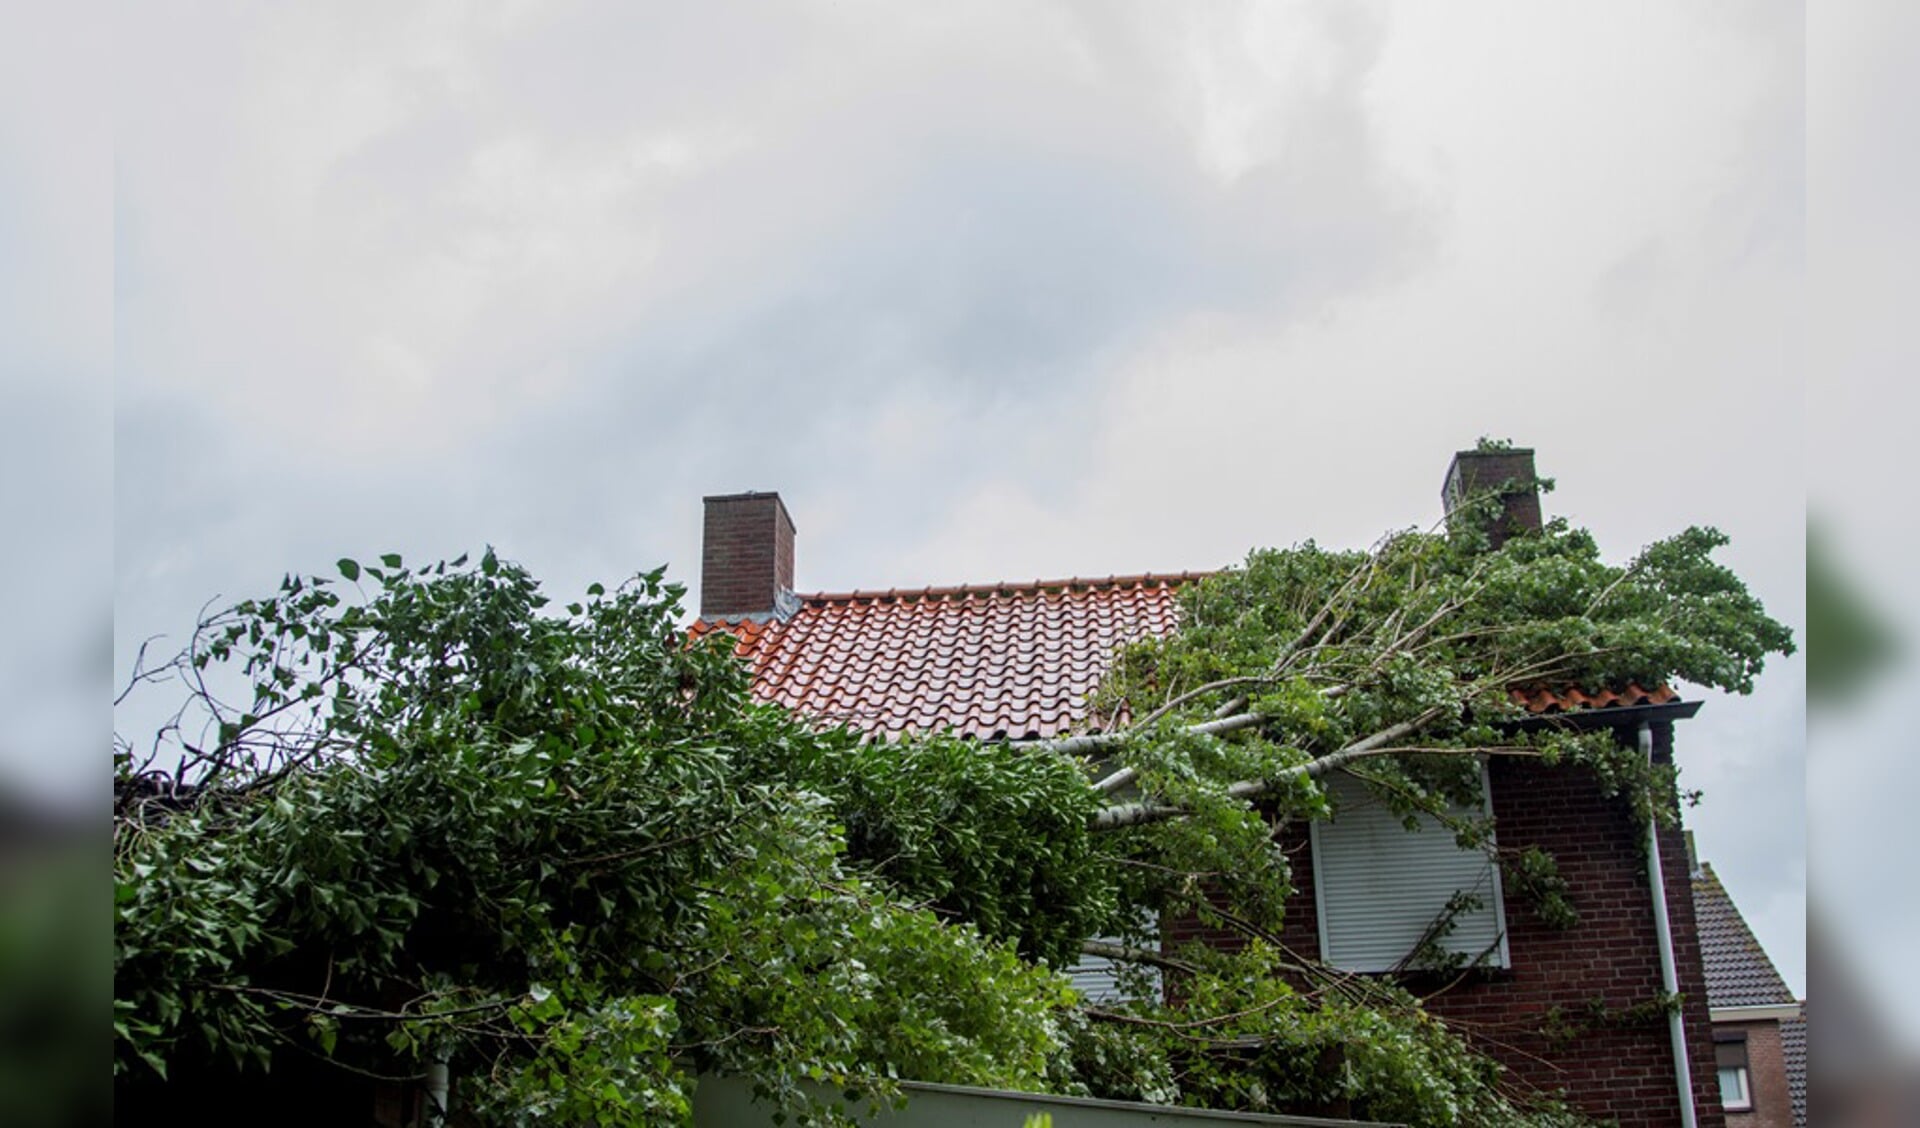 Stormschade Bolbergseweg, 5 juli 2015.